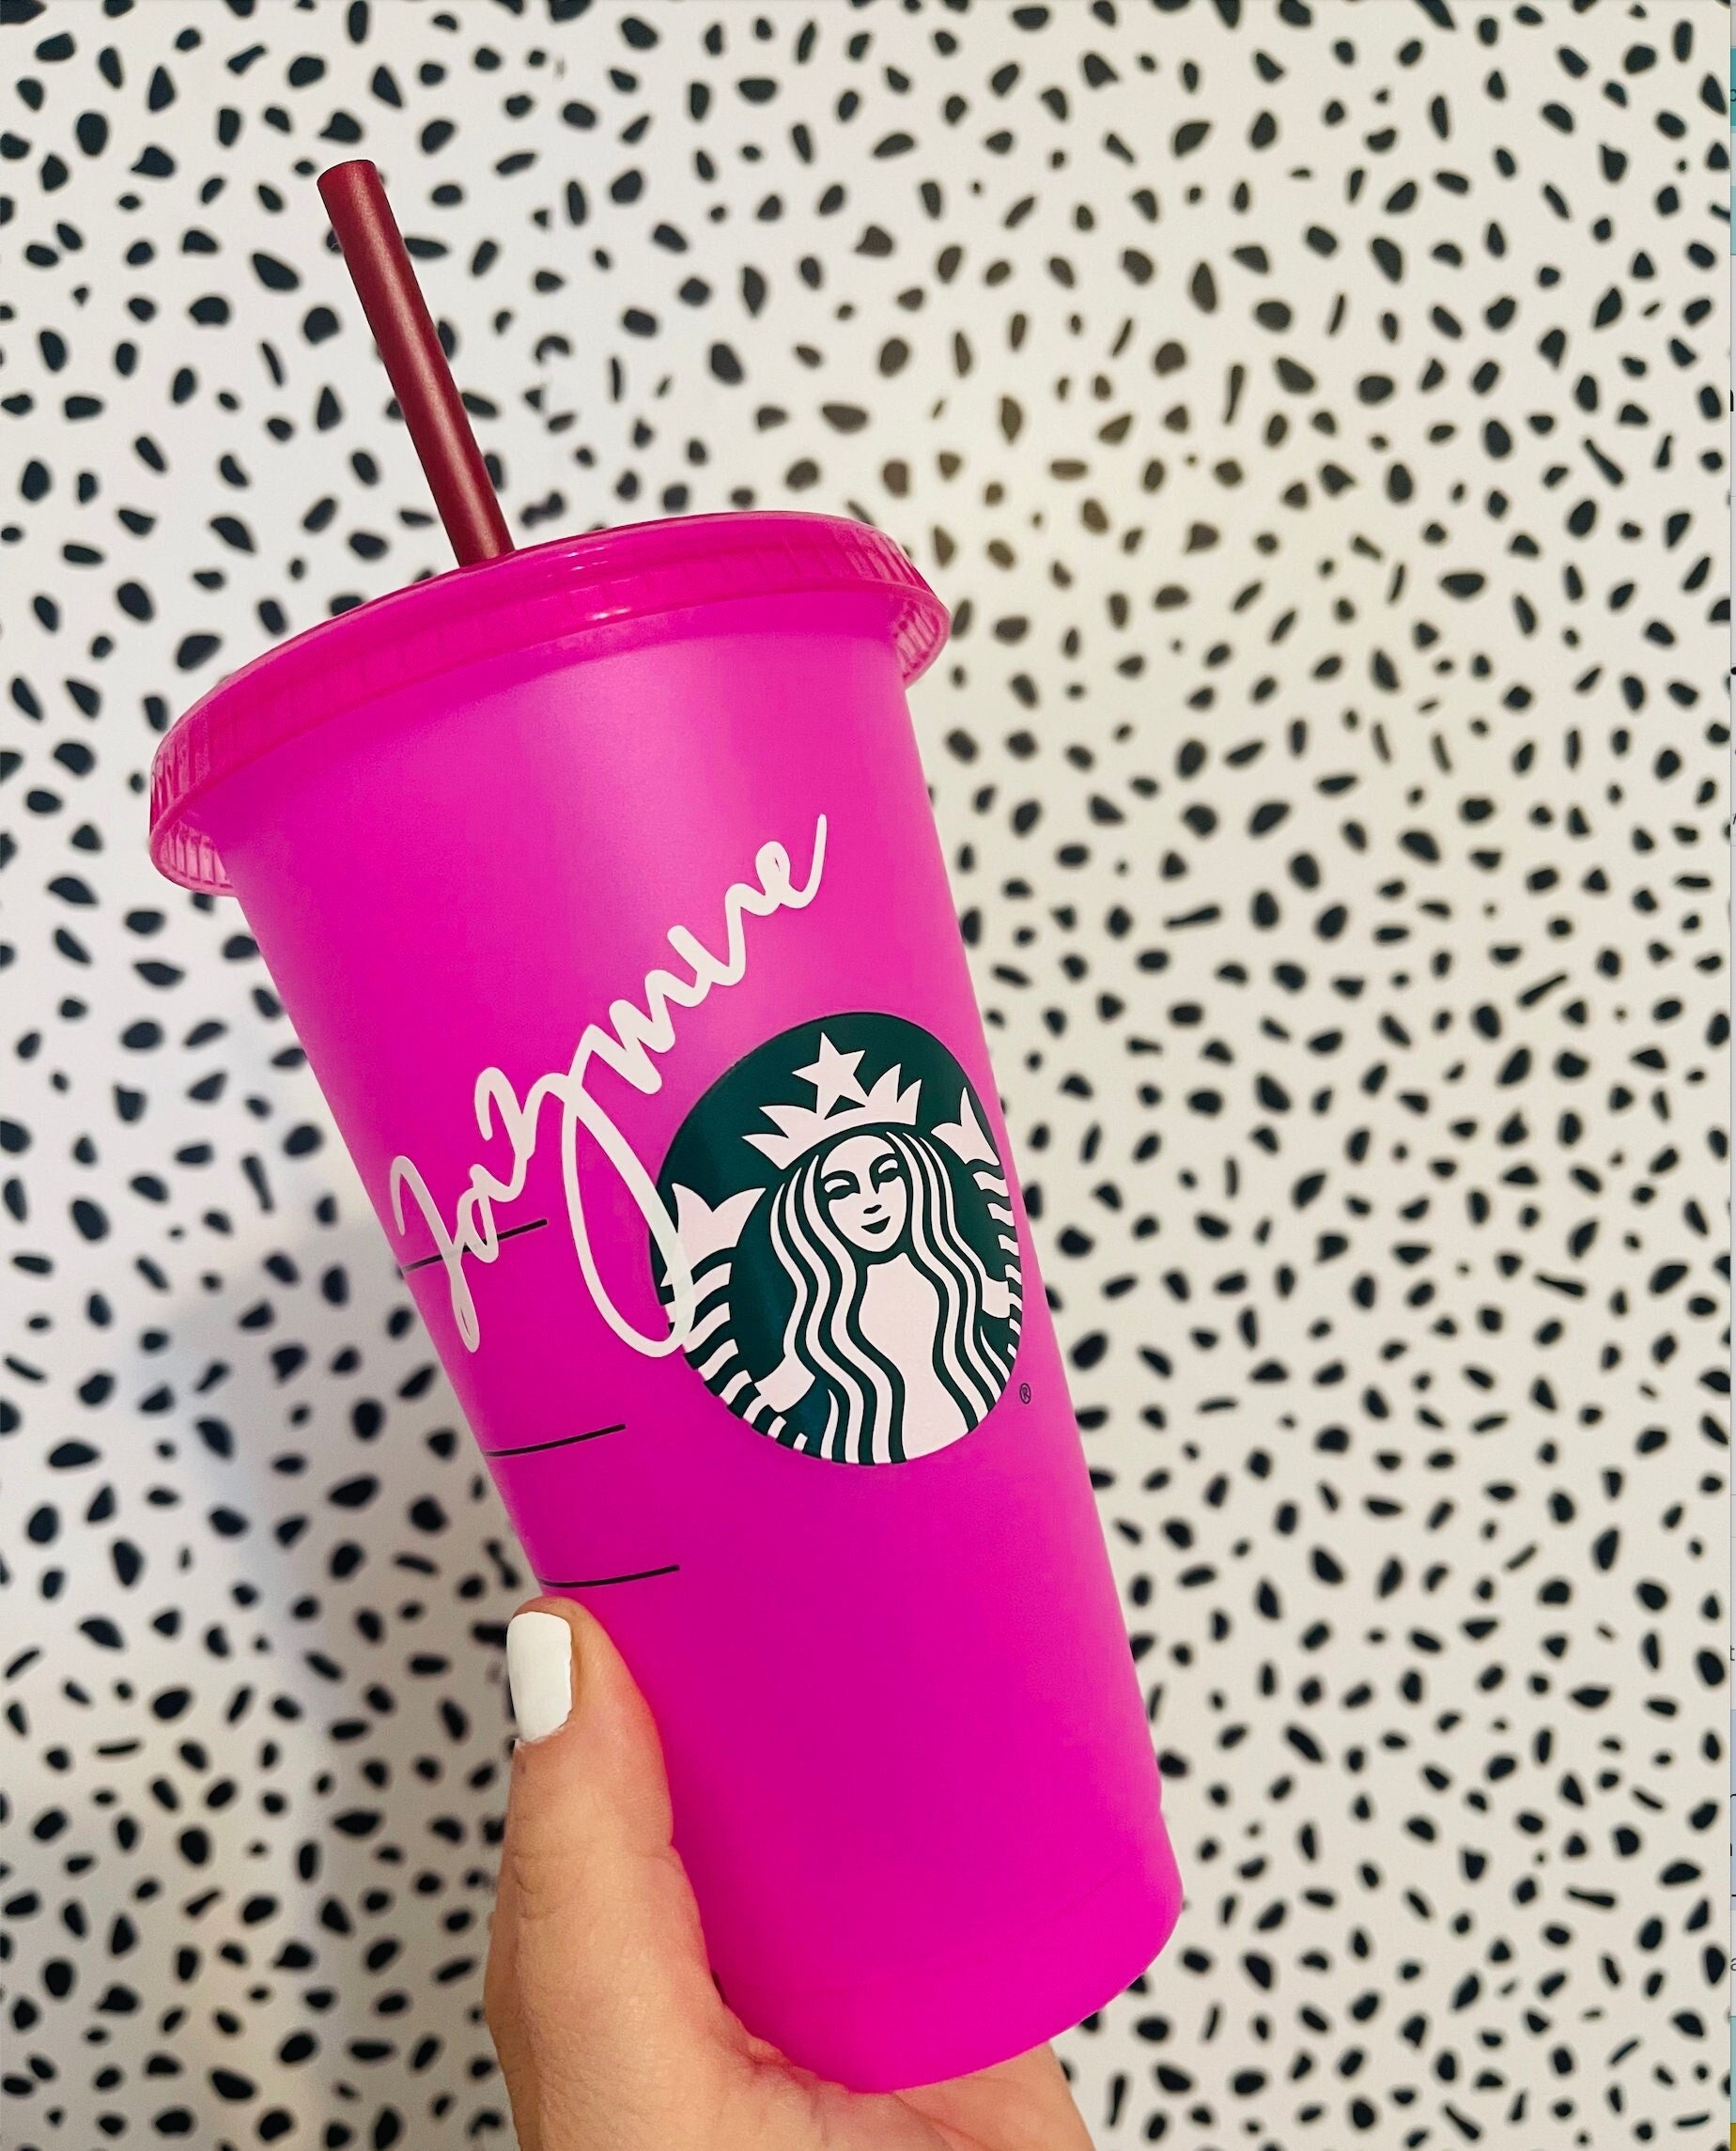 Starbucks Small Green Cup Straw Glass Milk Coffee Cup Tumbler Pink